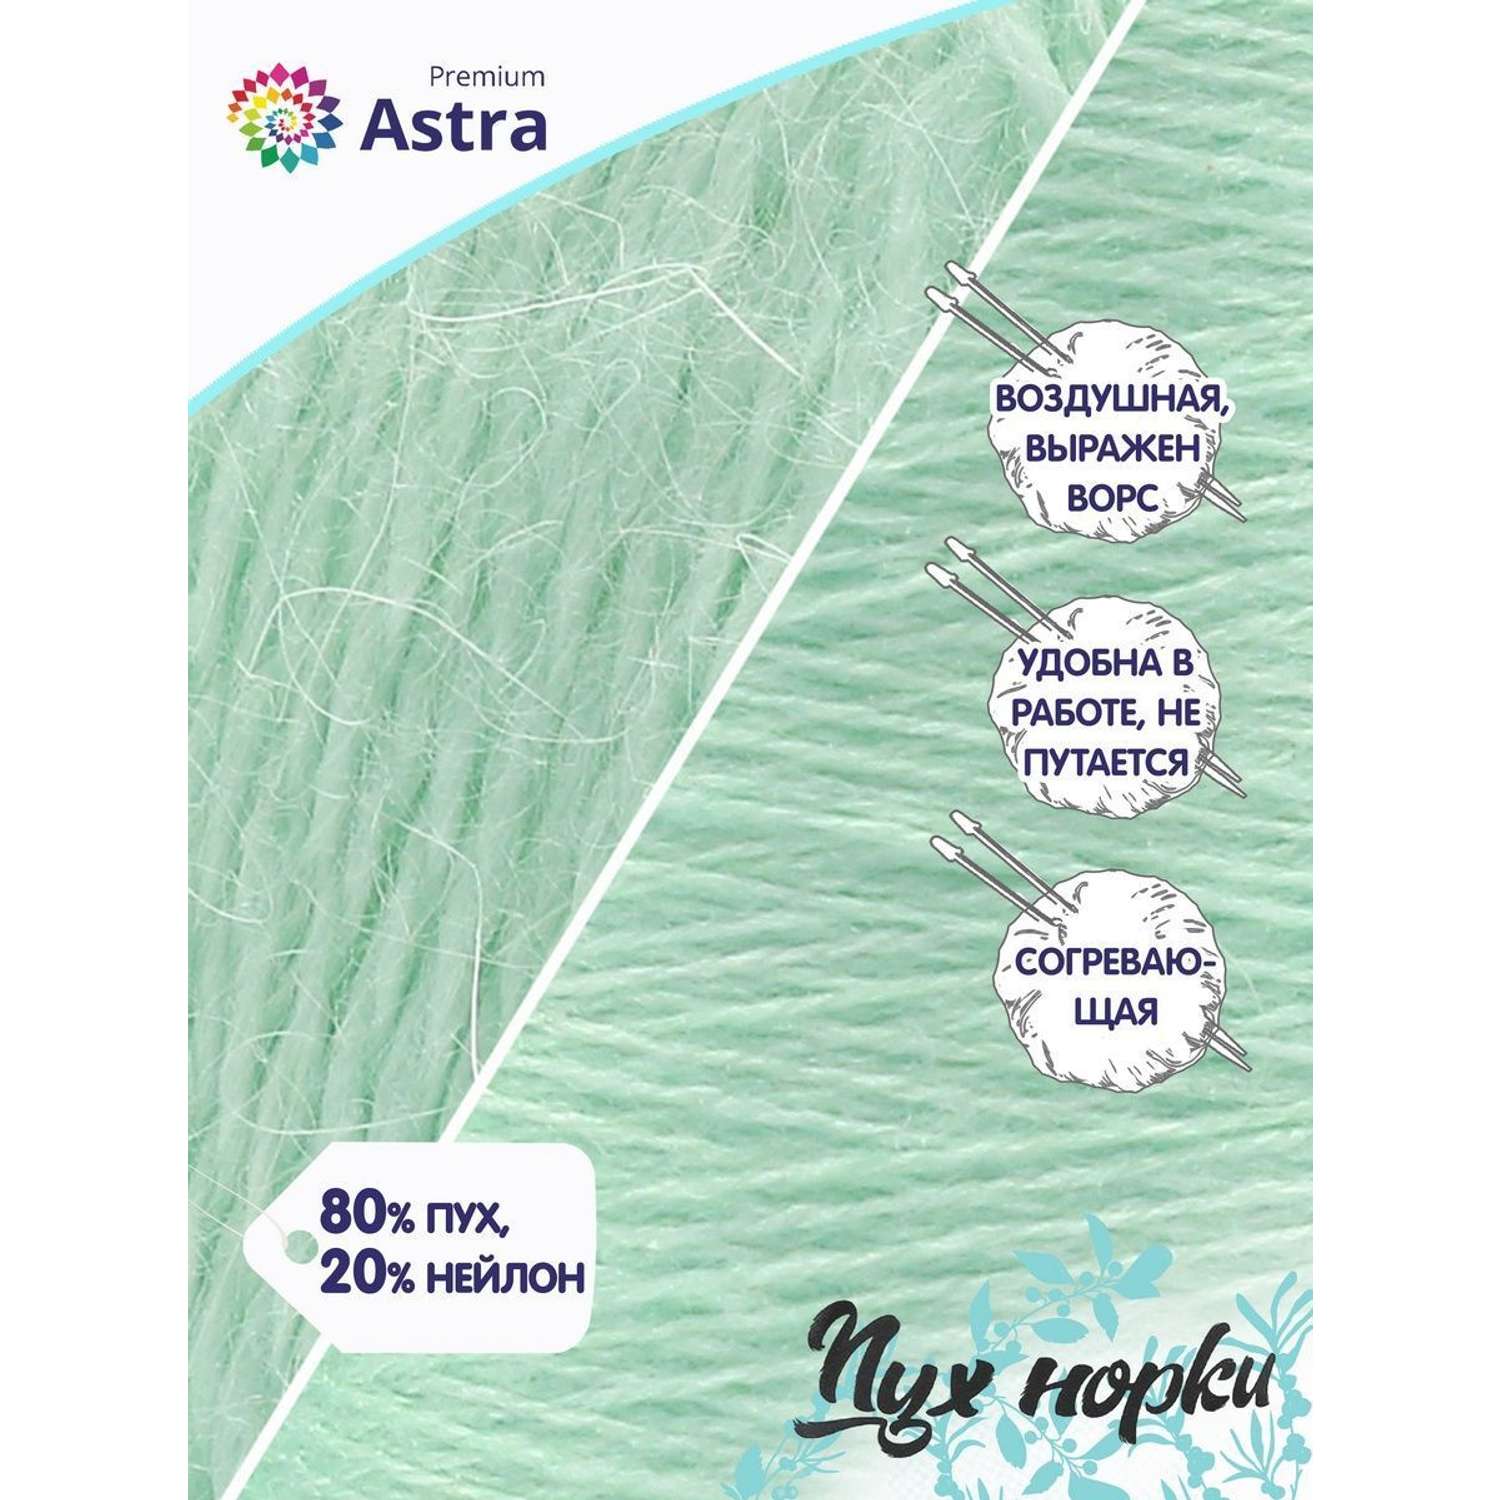 Пряжа Astra Premium Пух норки Mink yarn воздушная с ворсом 50 г 290 м 041 светлая мята 1 моток - фото 2